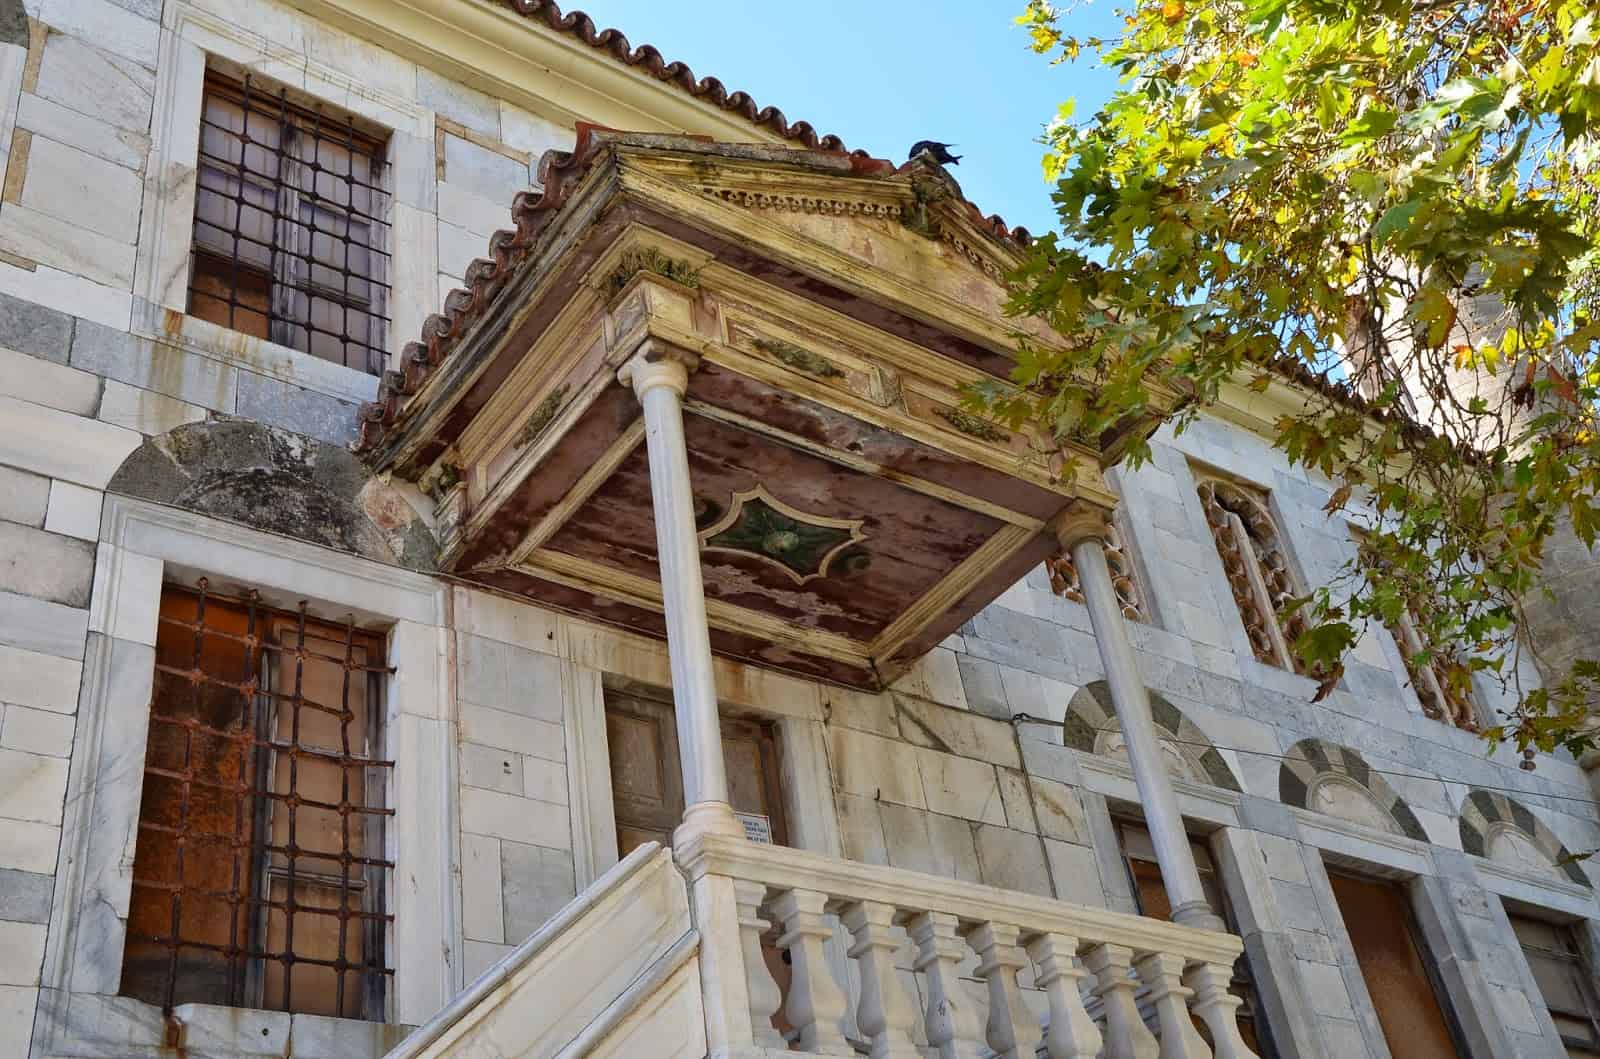 Entrance to the Gazi Hasan Pasha Mosque in Kos, Greece